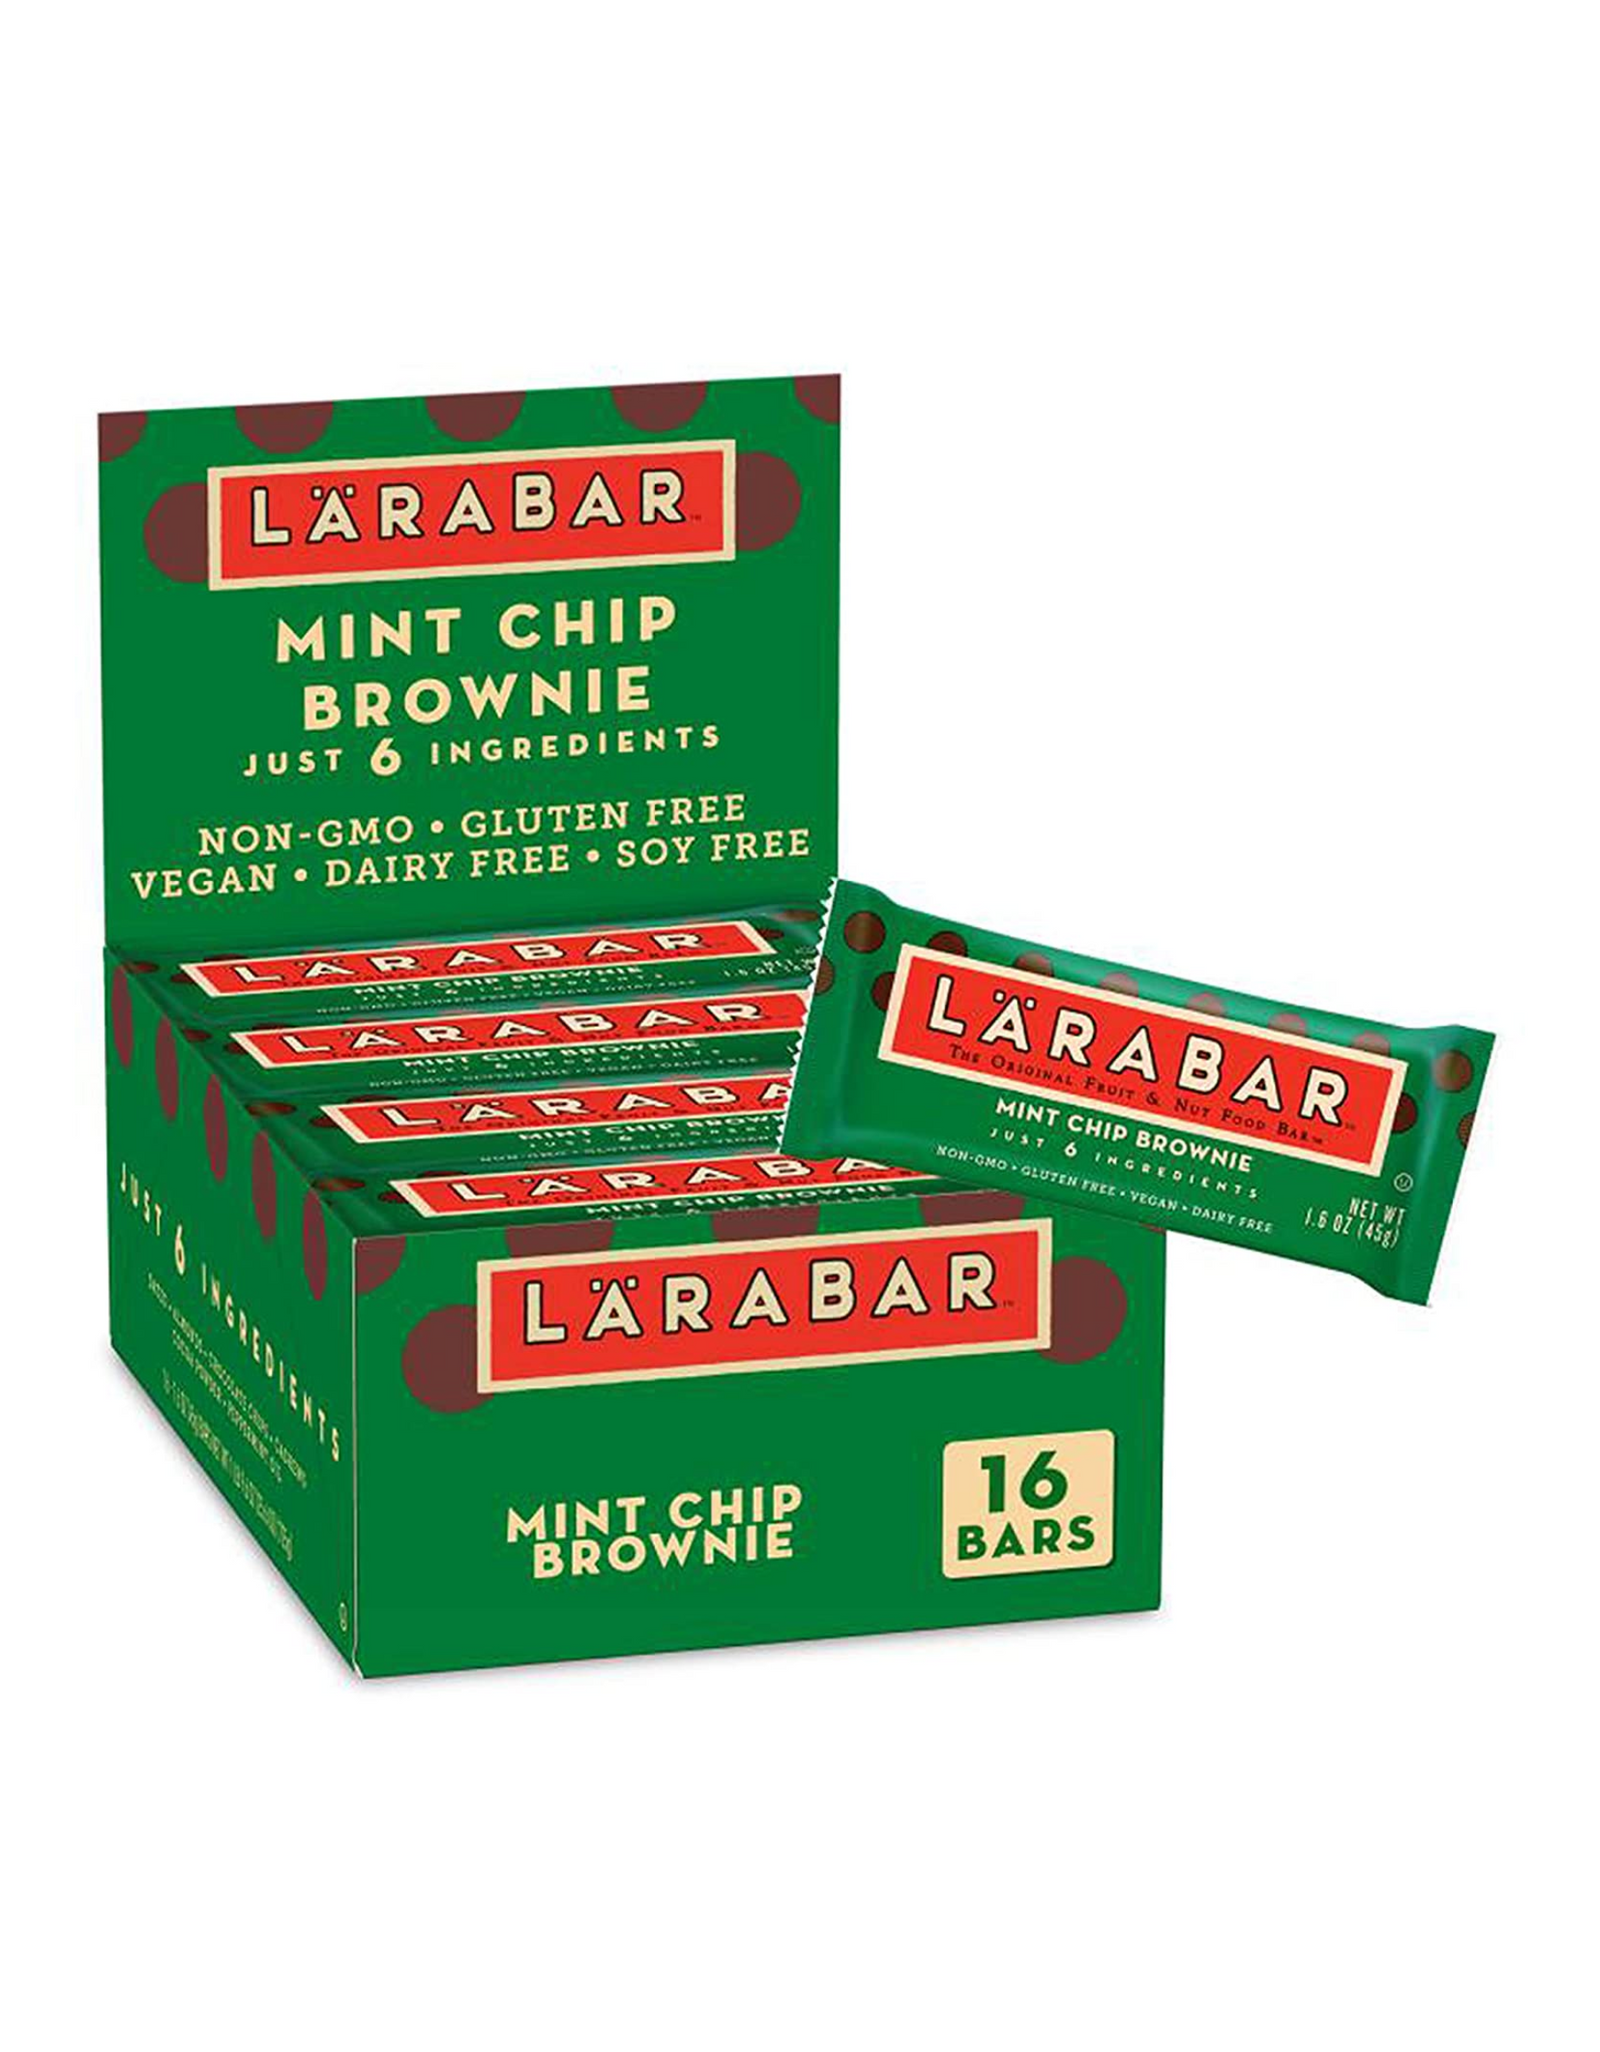 Larabar Mint Chip Brownie, Original Real Fruit and Nut Bar, 1.7 oz, 16 Count